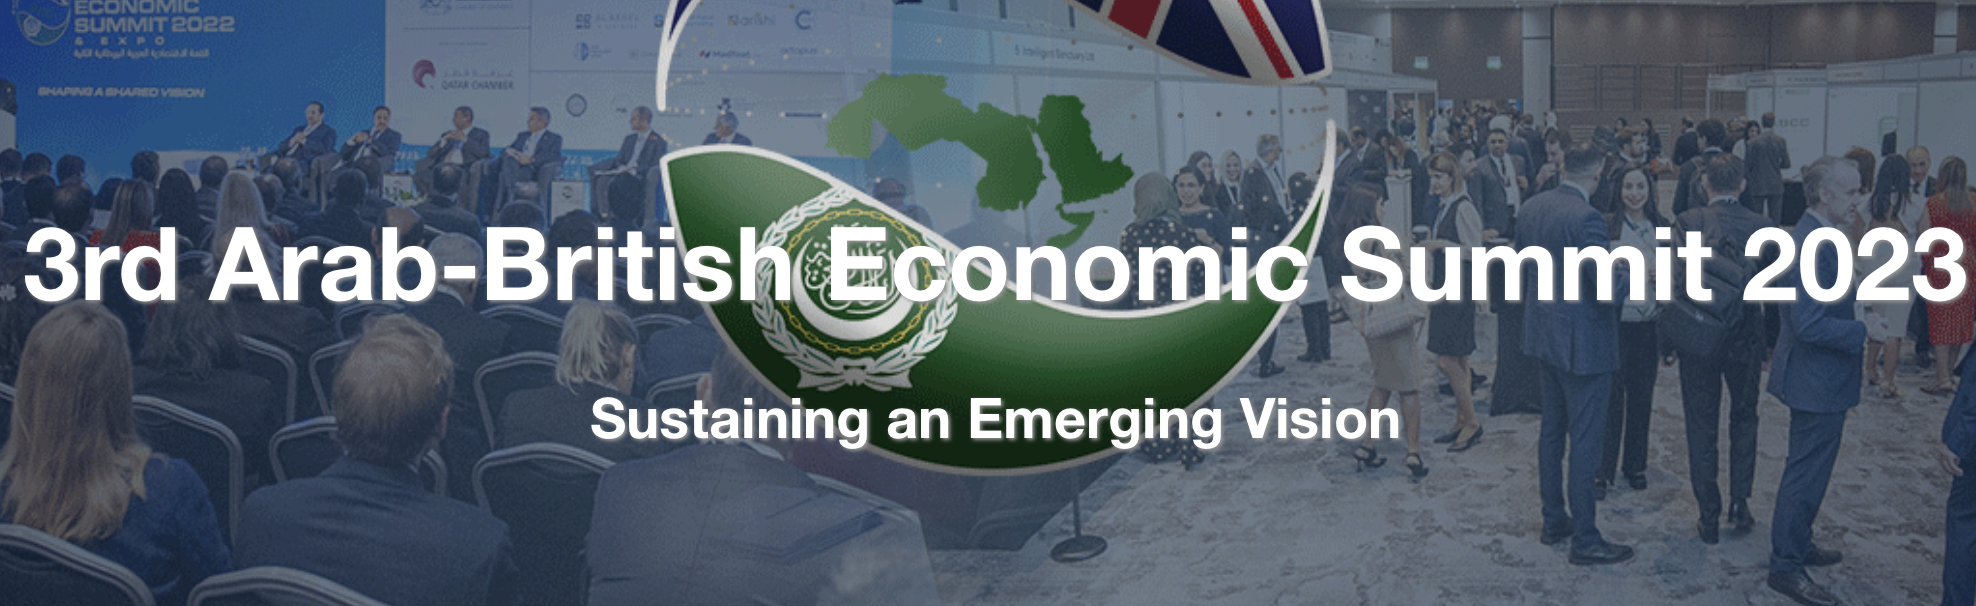 Arab British Economic Summit, 2023